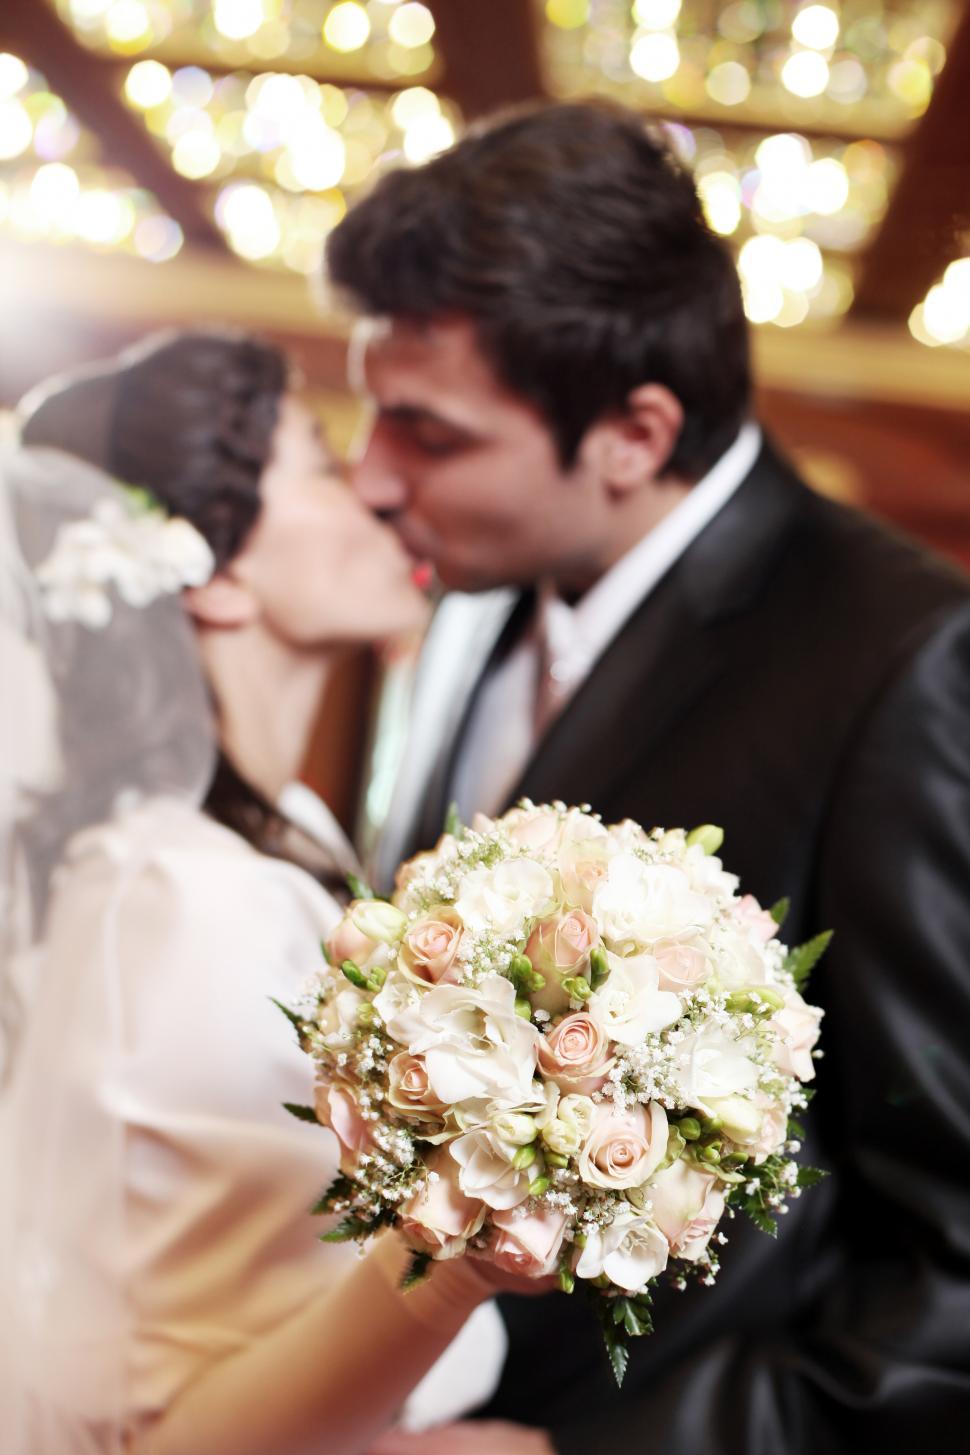 Free Image of Bride and Groom Kiss behind Flowers 